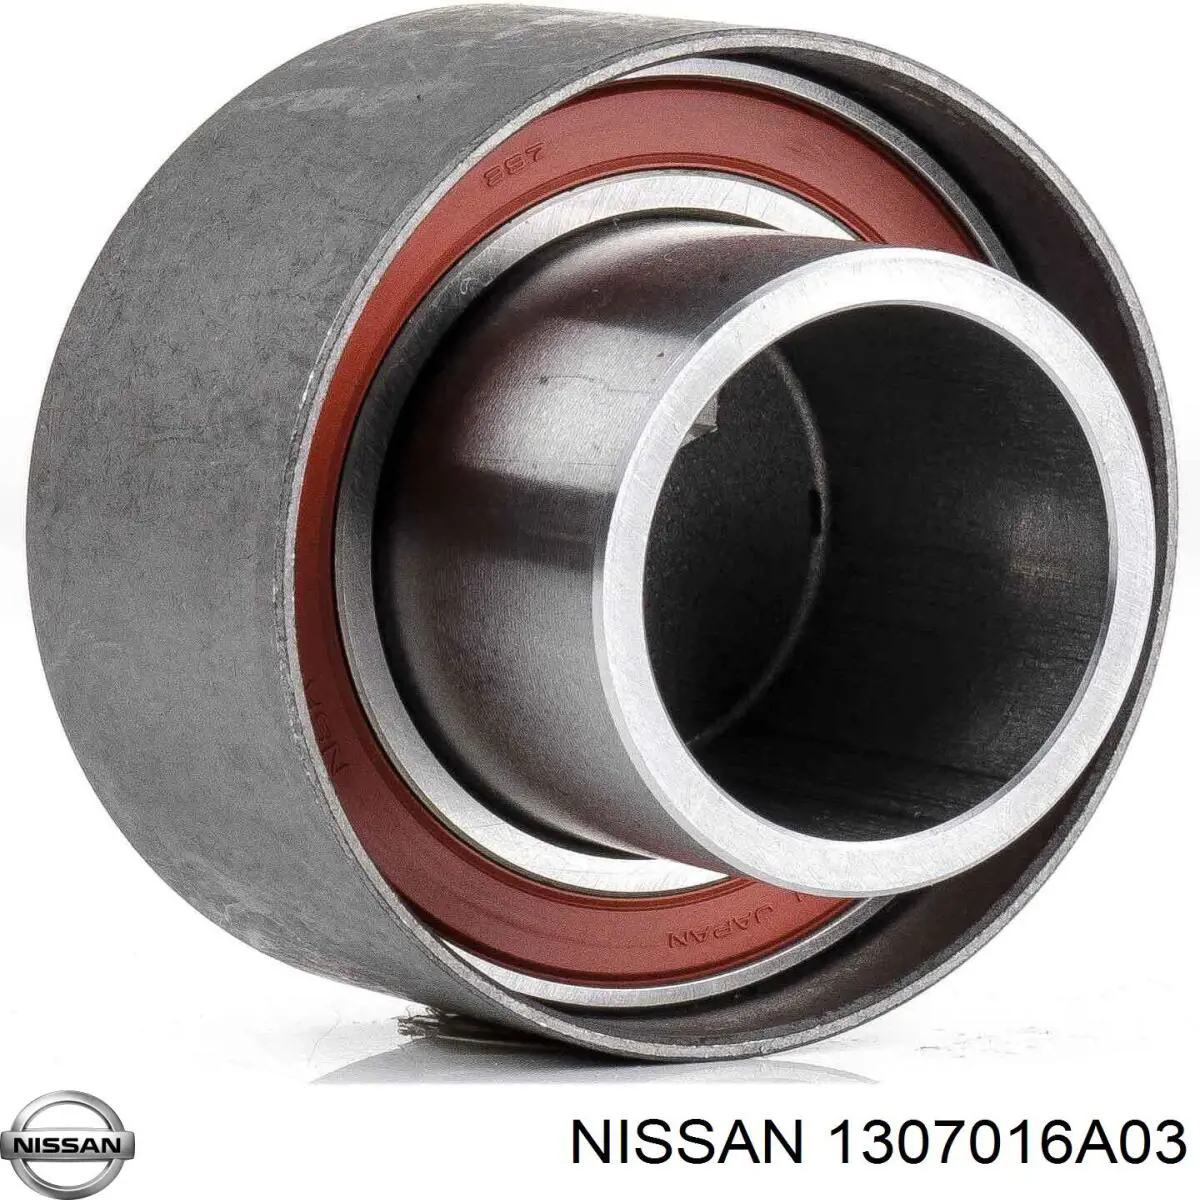 1307016A03 Nissan ролик грм